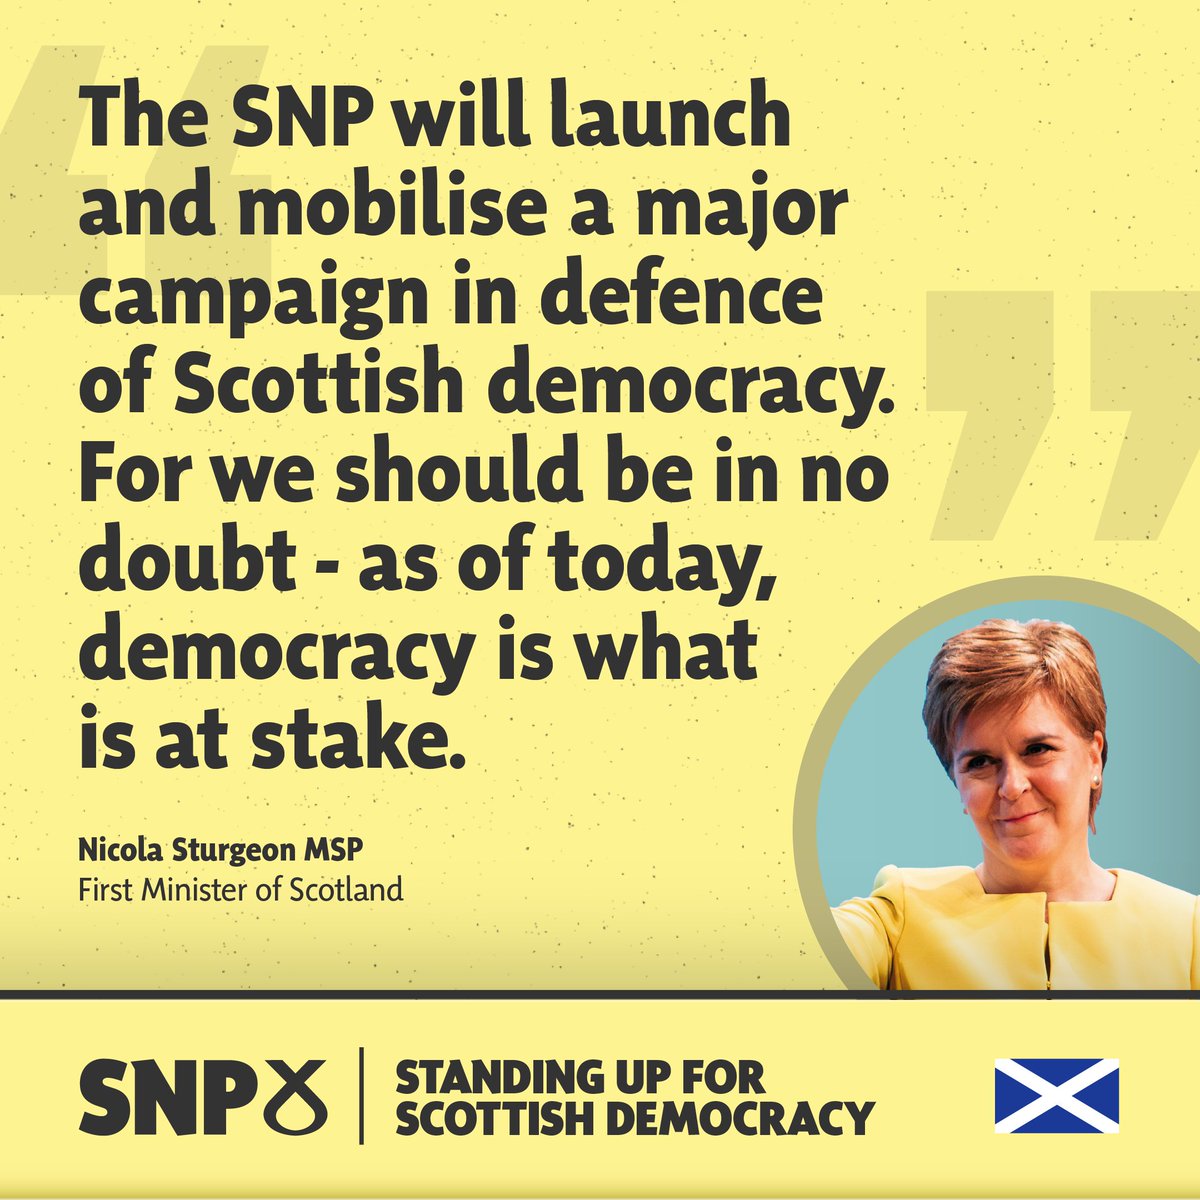 @theSNP's photo on The SNP